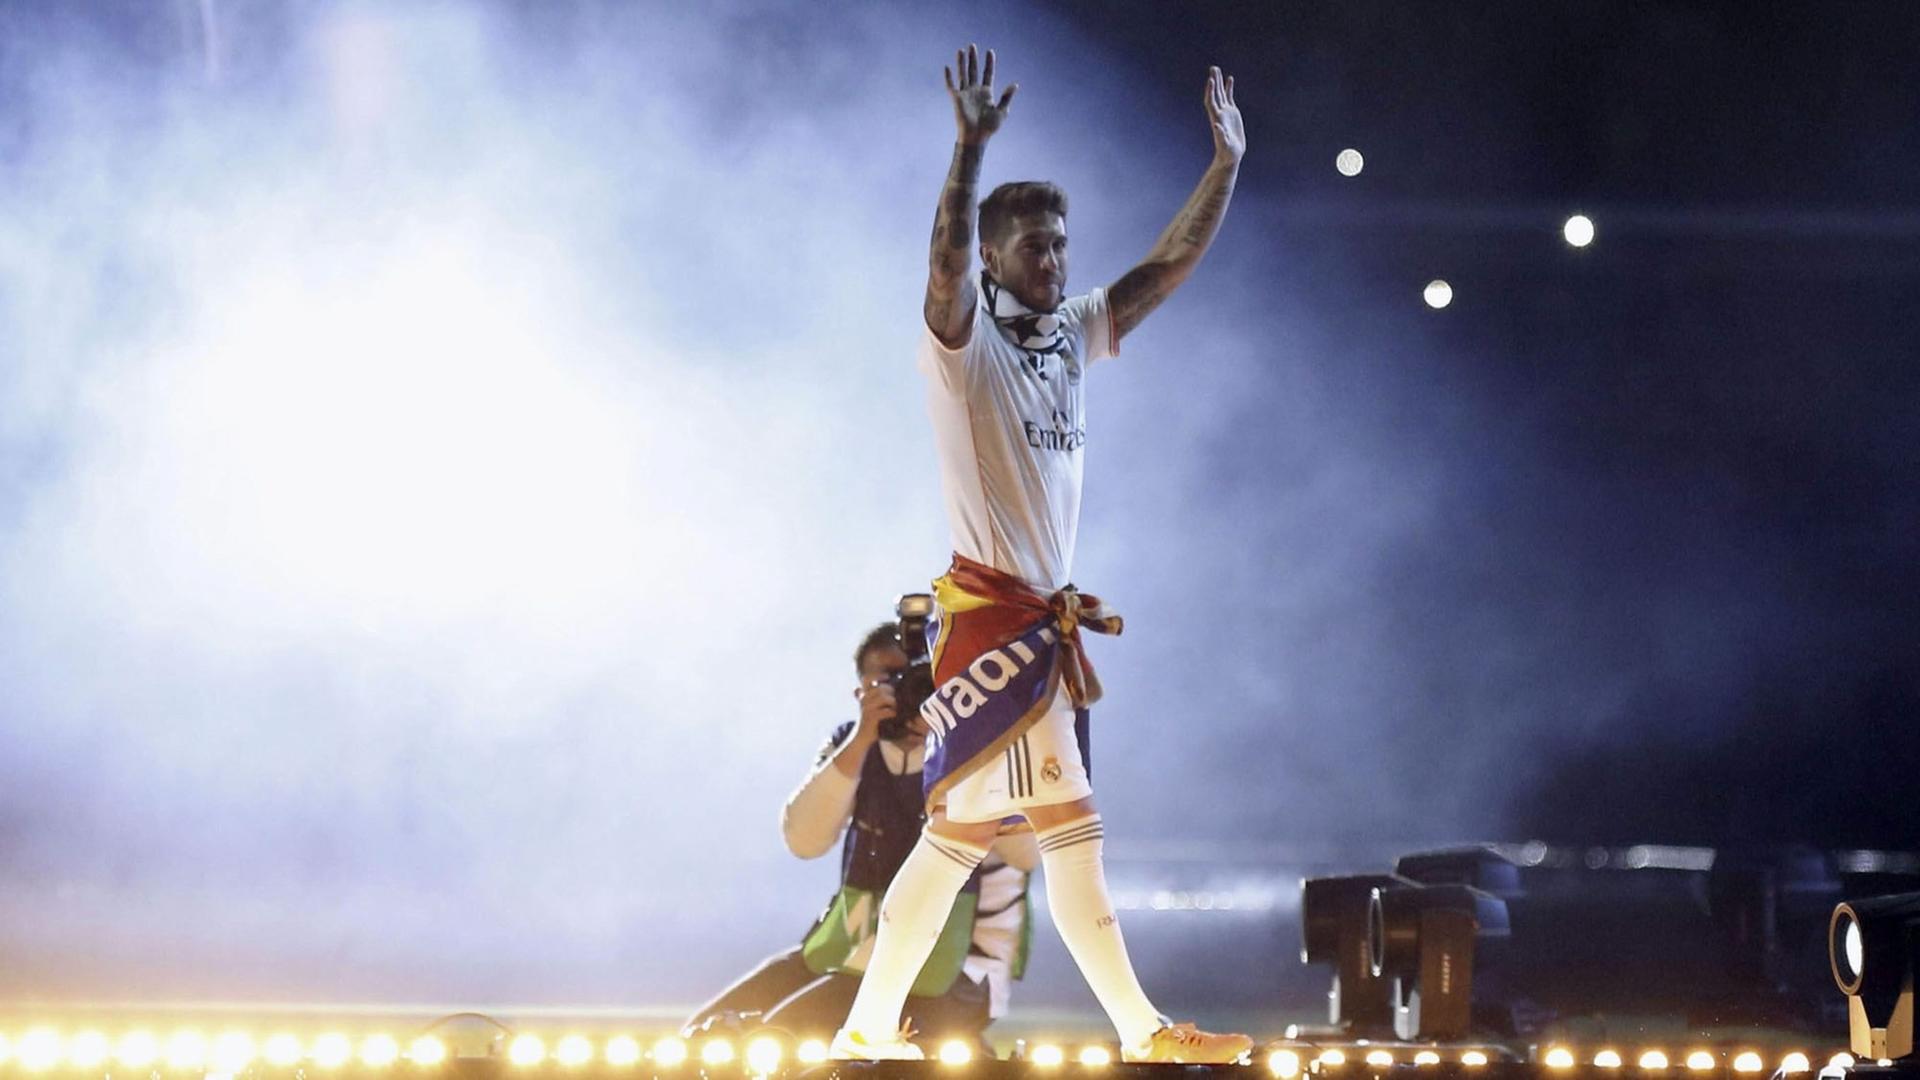 Champions-League-Finale zwischen Real Madrid und Atletico Madrid in Lissabon am 25.05.2014 Real Madrid's Spieler Sergio Ramos